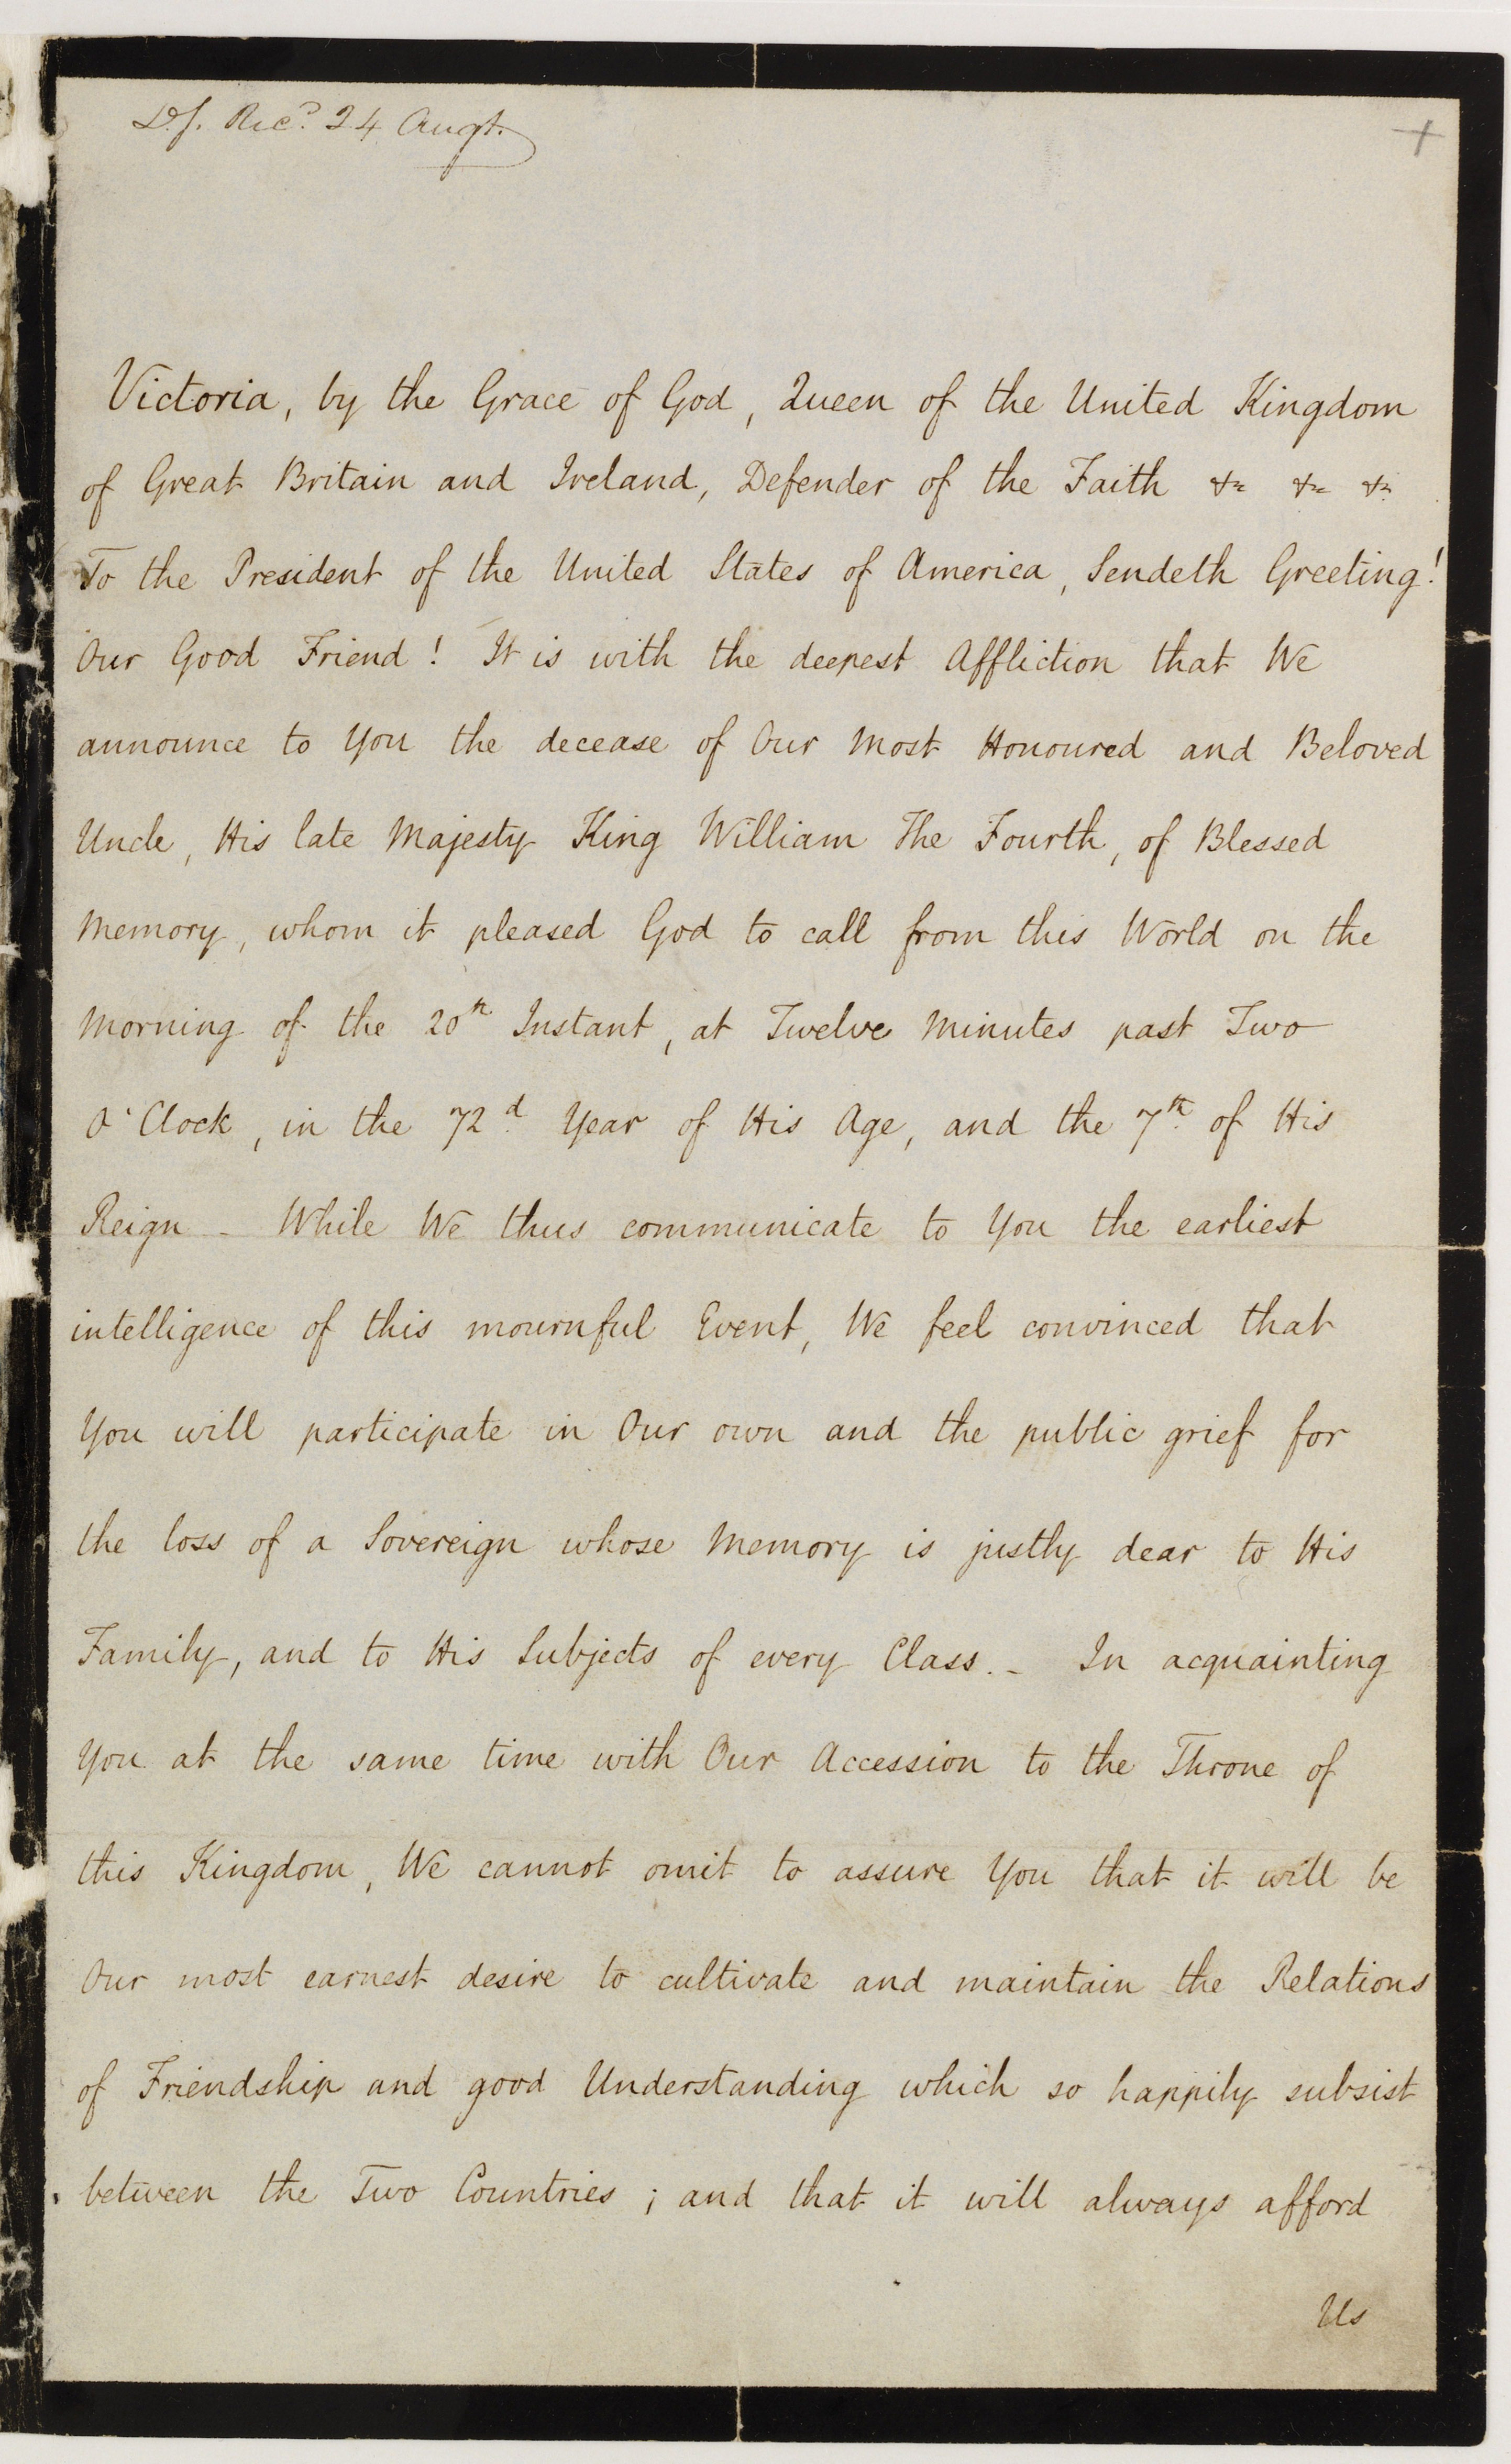 Letter written by 'DRUNK' Queen Victoria using 'early text speak